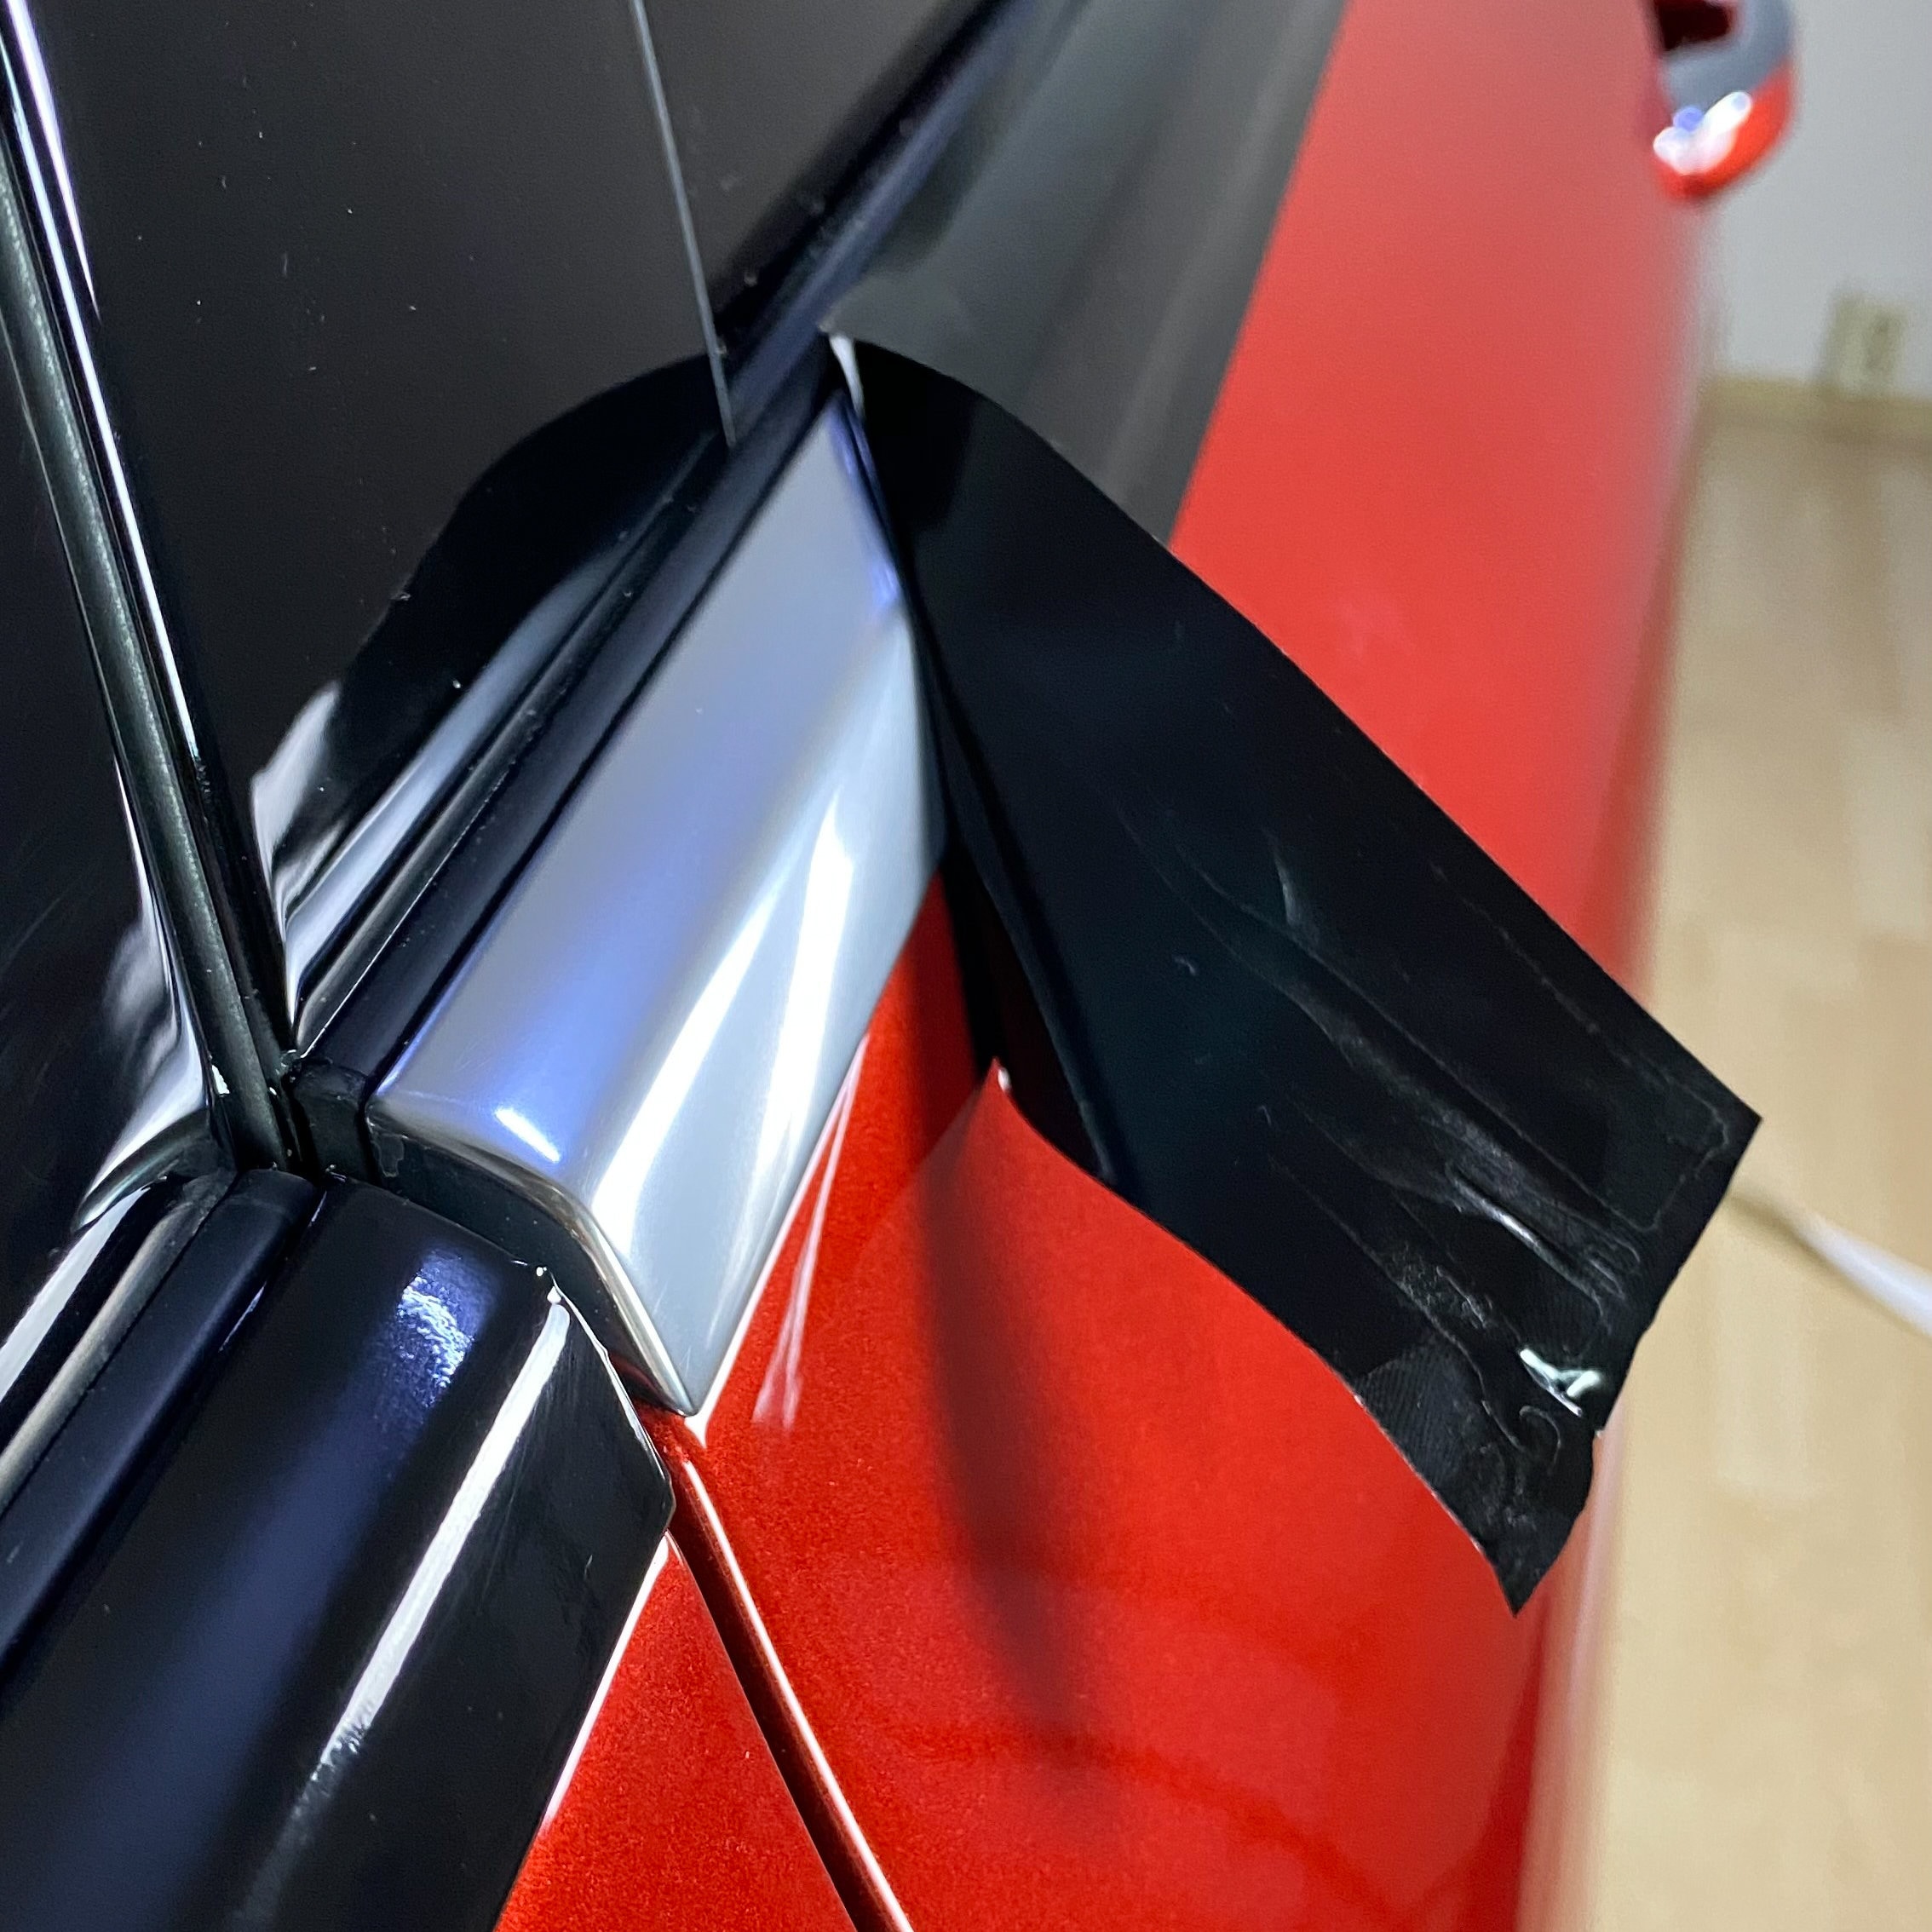 Black Grill Foil Car Trim for Foiling Car Chrome Strips Front Grill  Exterior Black Film Look Package Gloss Black Jet Black (12 cm x 10 m  Length, Black High Gloss) : : Automotive